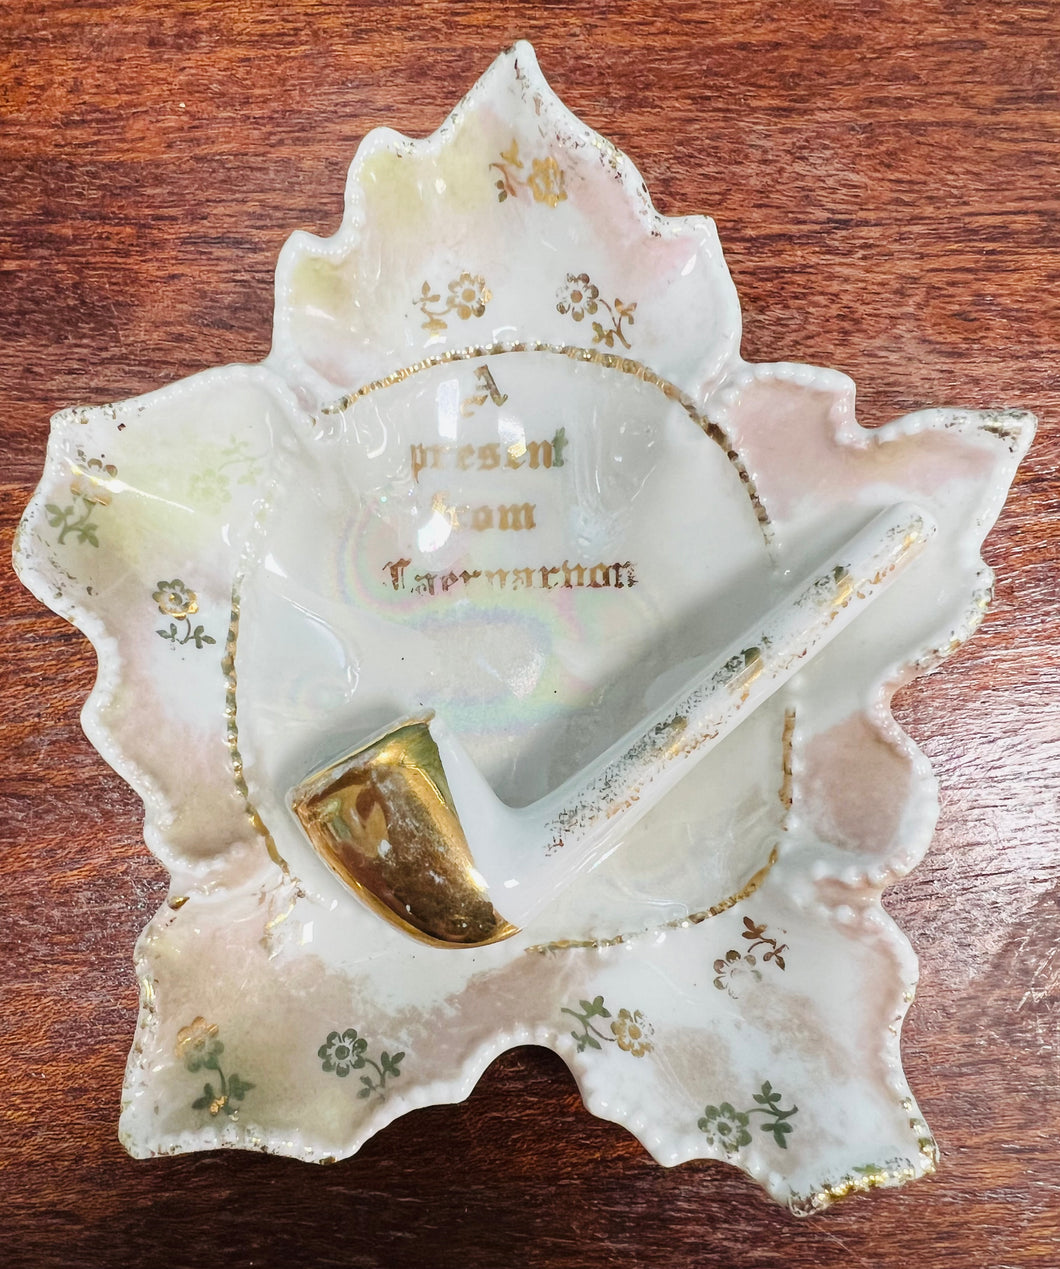 Powlen trinkets hynafol ‘A present from Caernarvon’ gyda pibell / Antique ‘A present from Caernarvon’ trinket bowl with smoking pipe